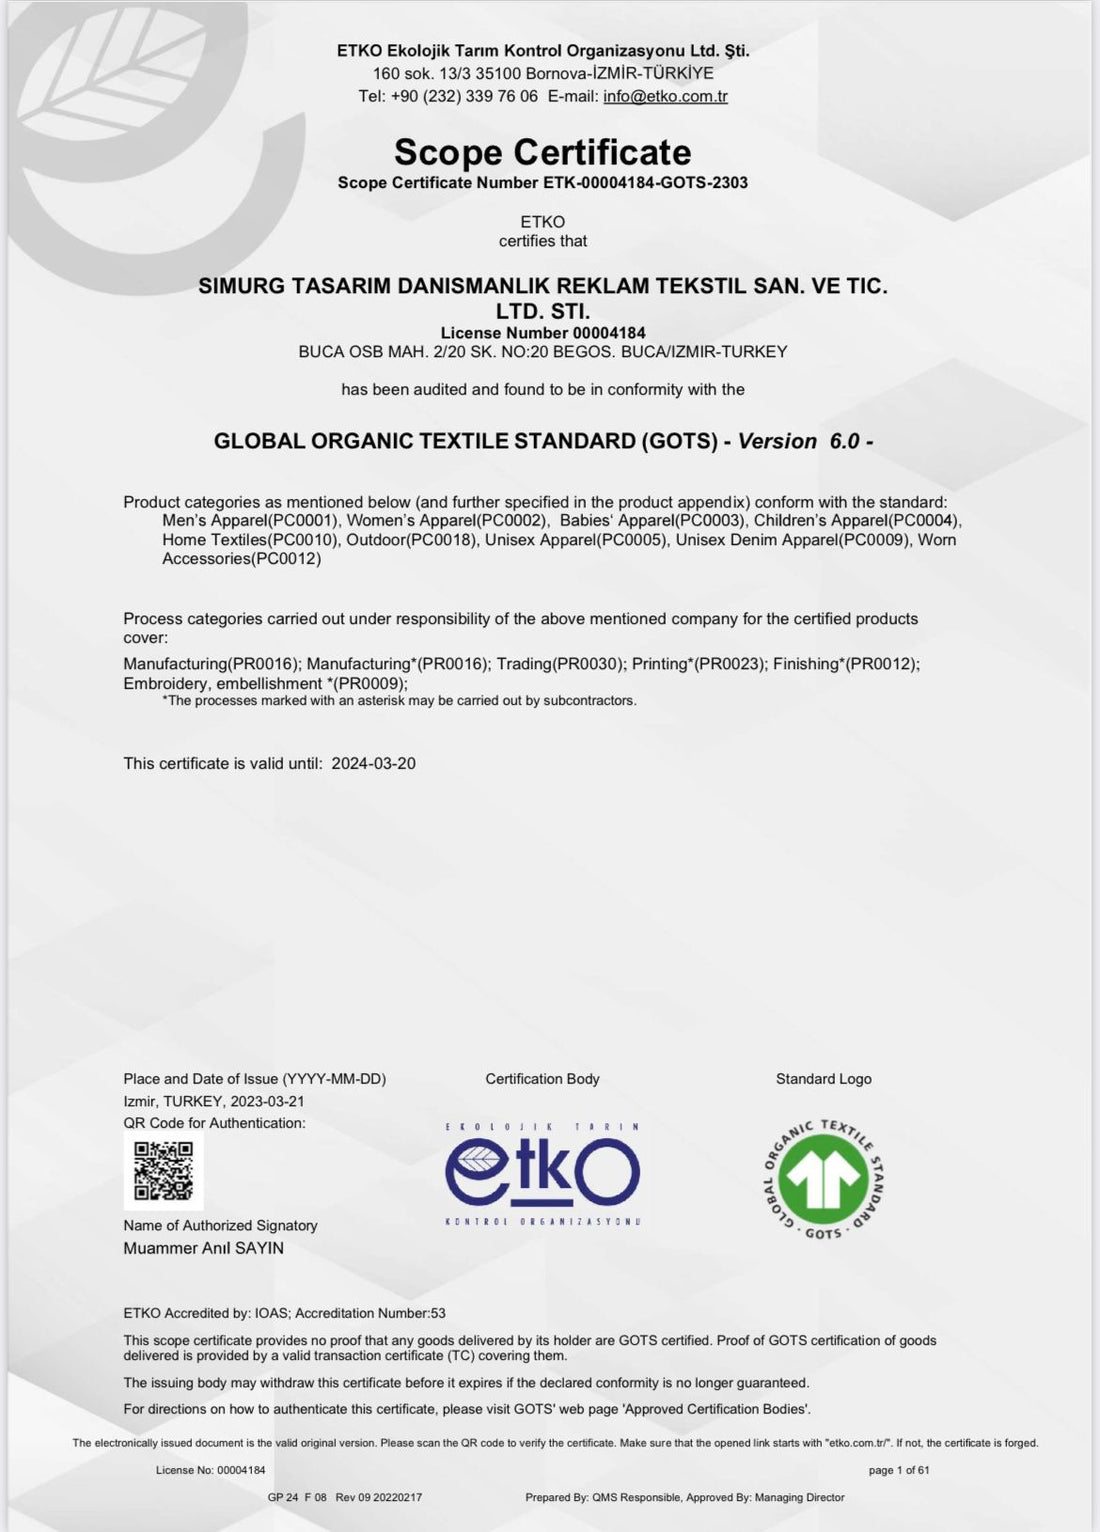 Global Organic Textile Standard (GOTS) - Version 6.0 -